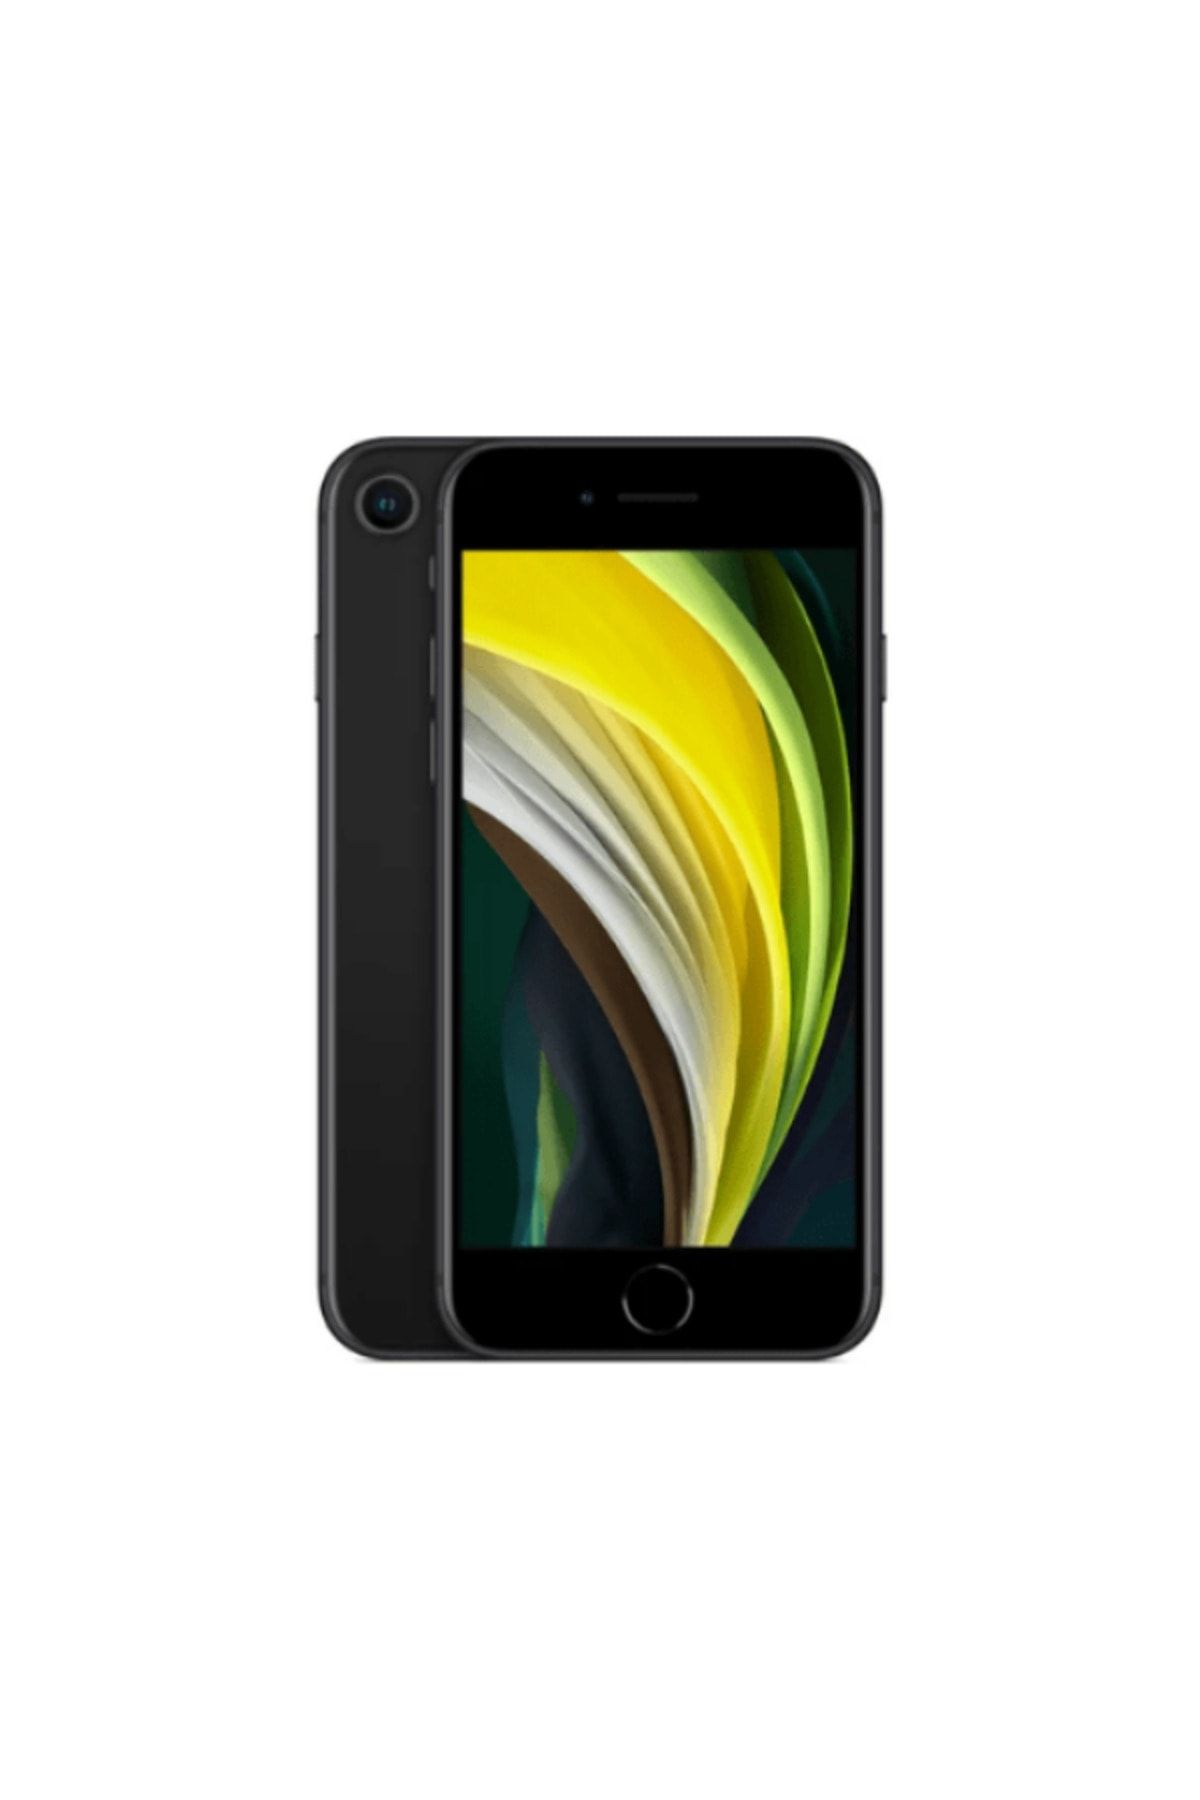 Apple Yenilenmiş iPhone SE 2020 64 GB Siyah Cep Telefonu (12 Ay Garantili) - B Kalite